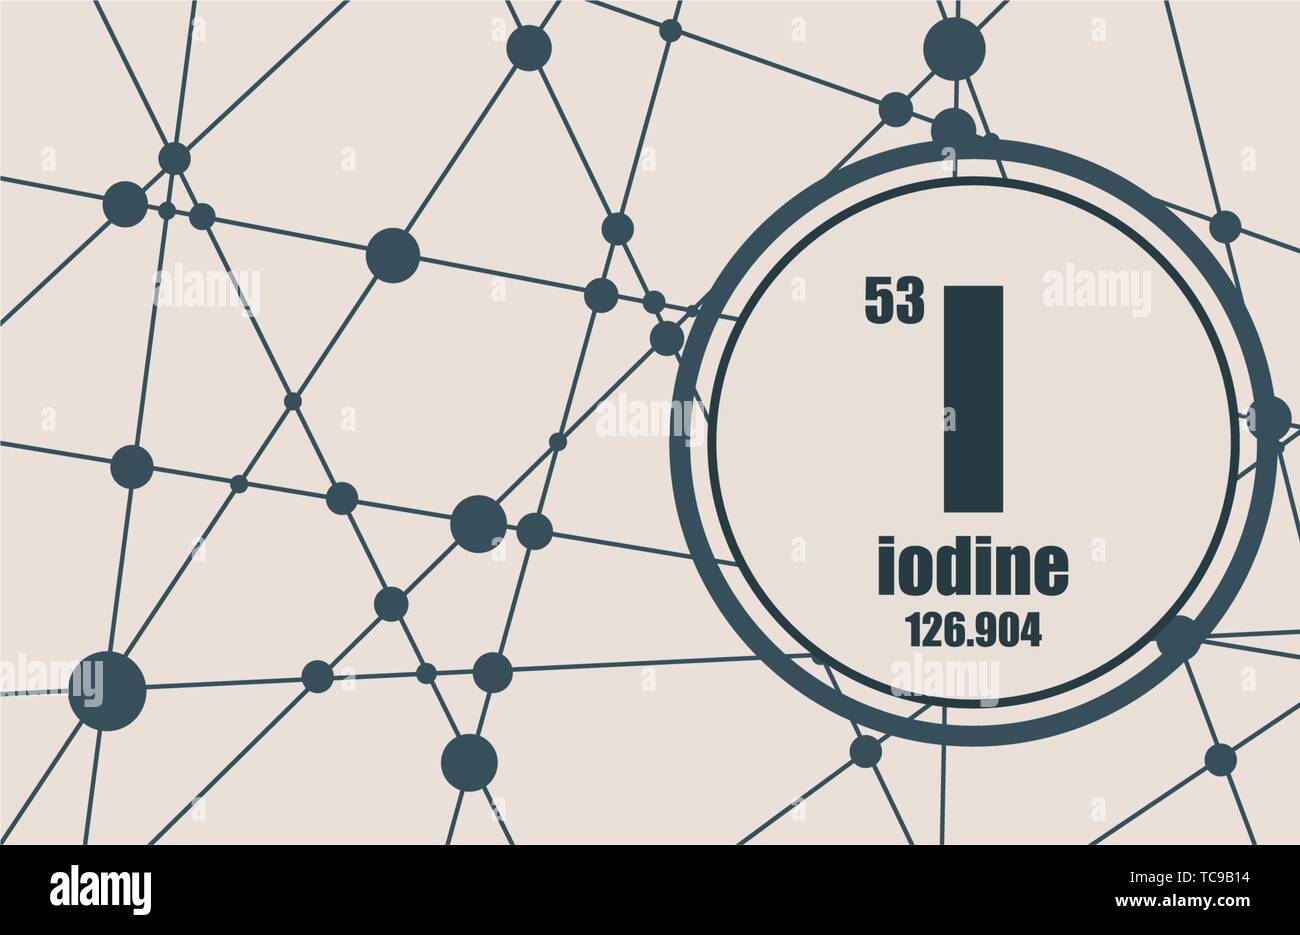 Iodine chemical element. Stock Vector